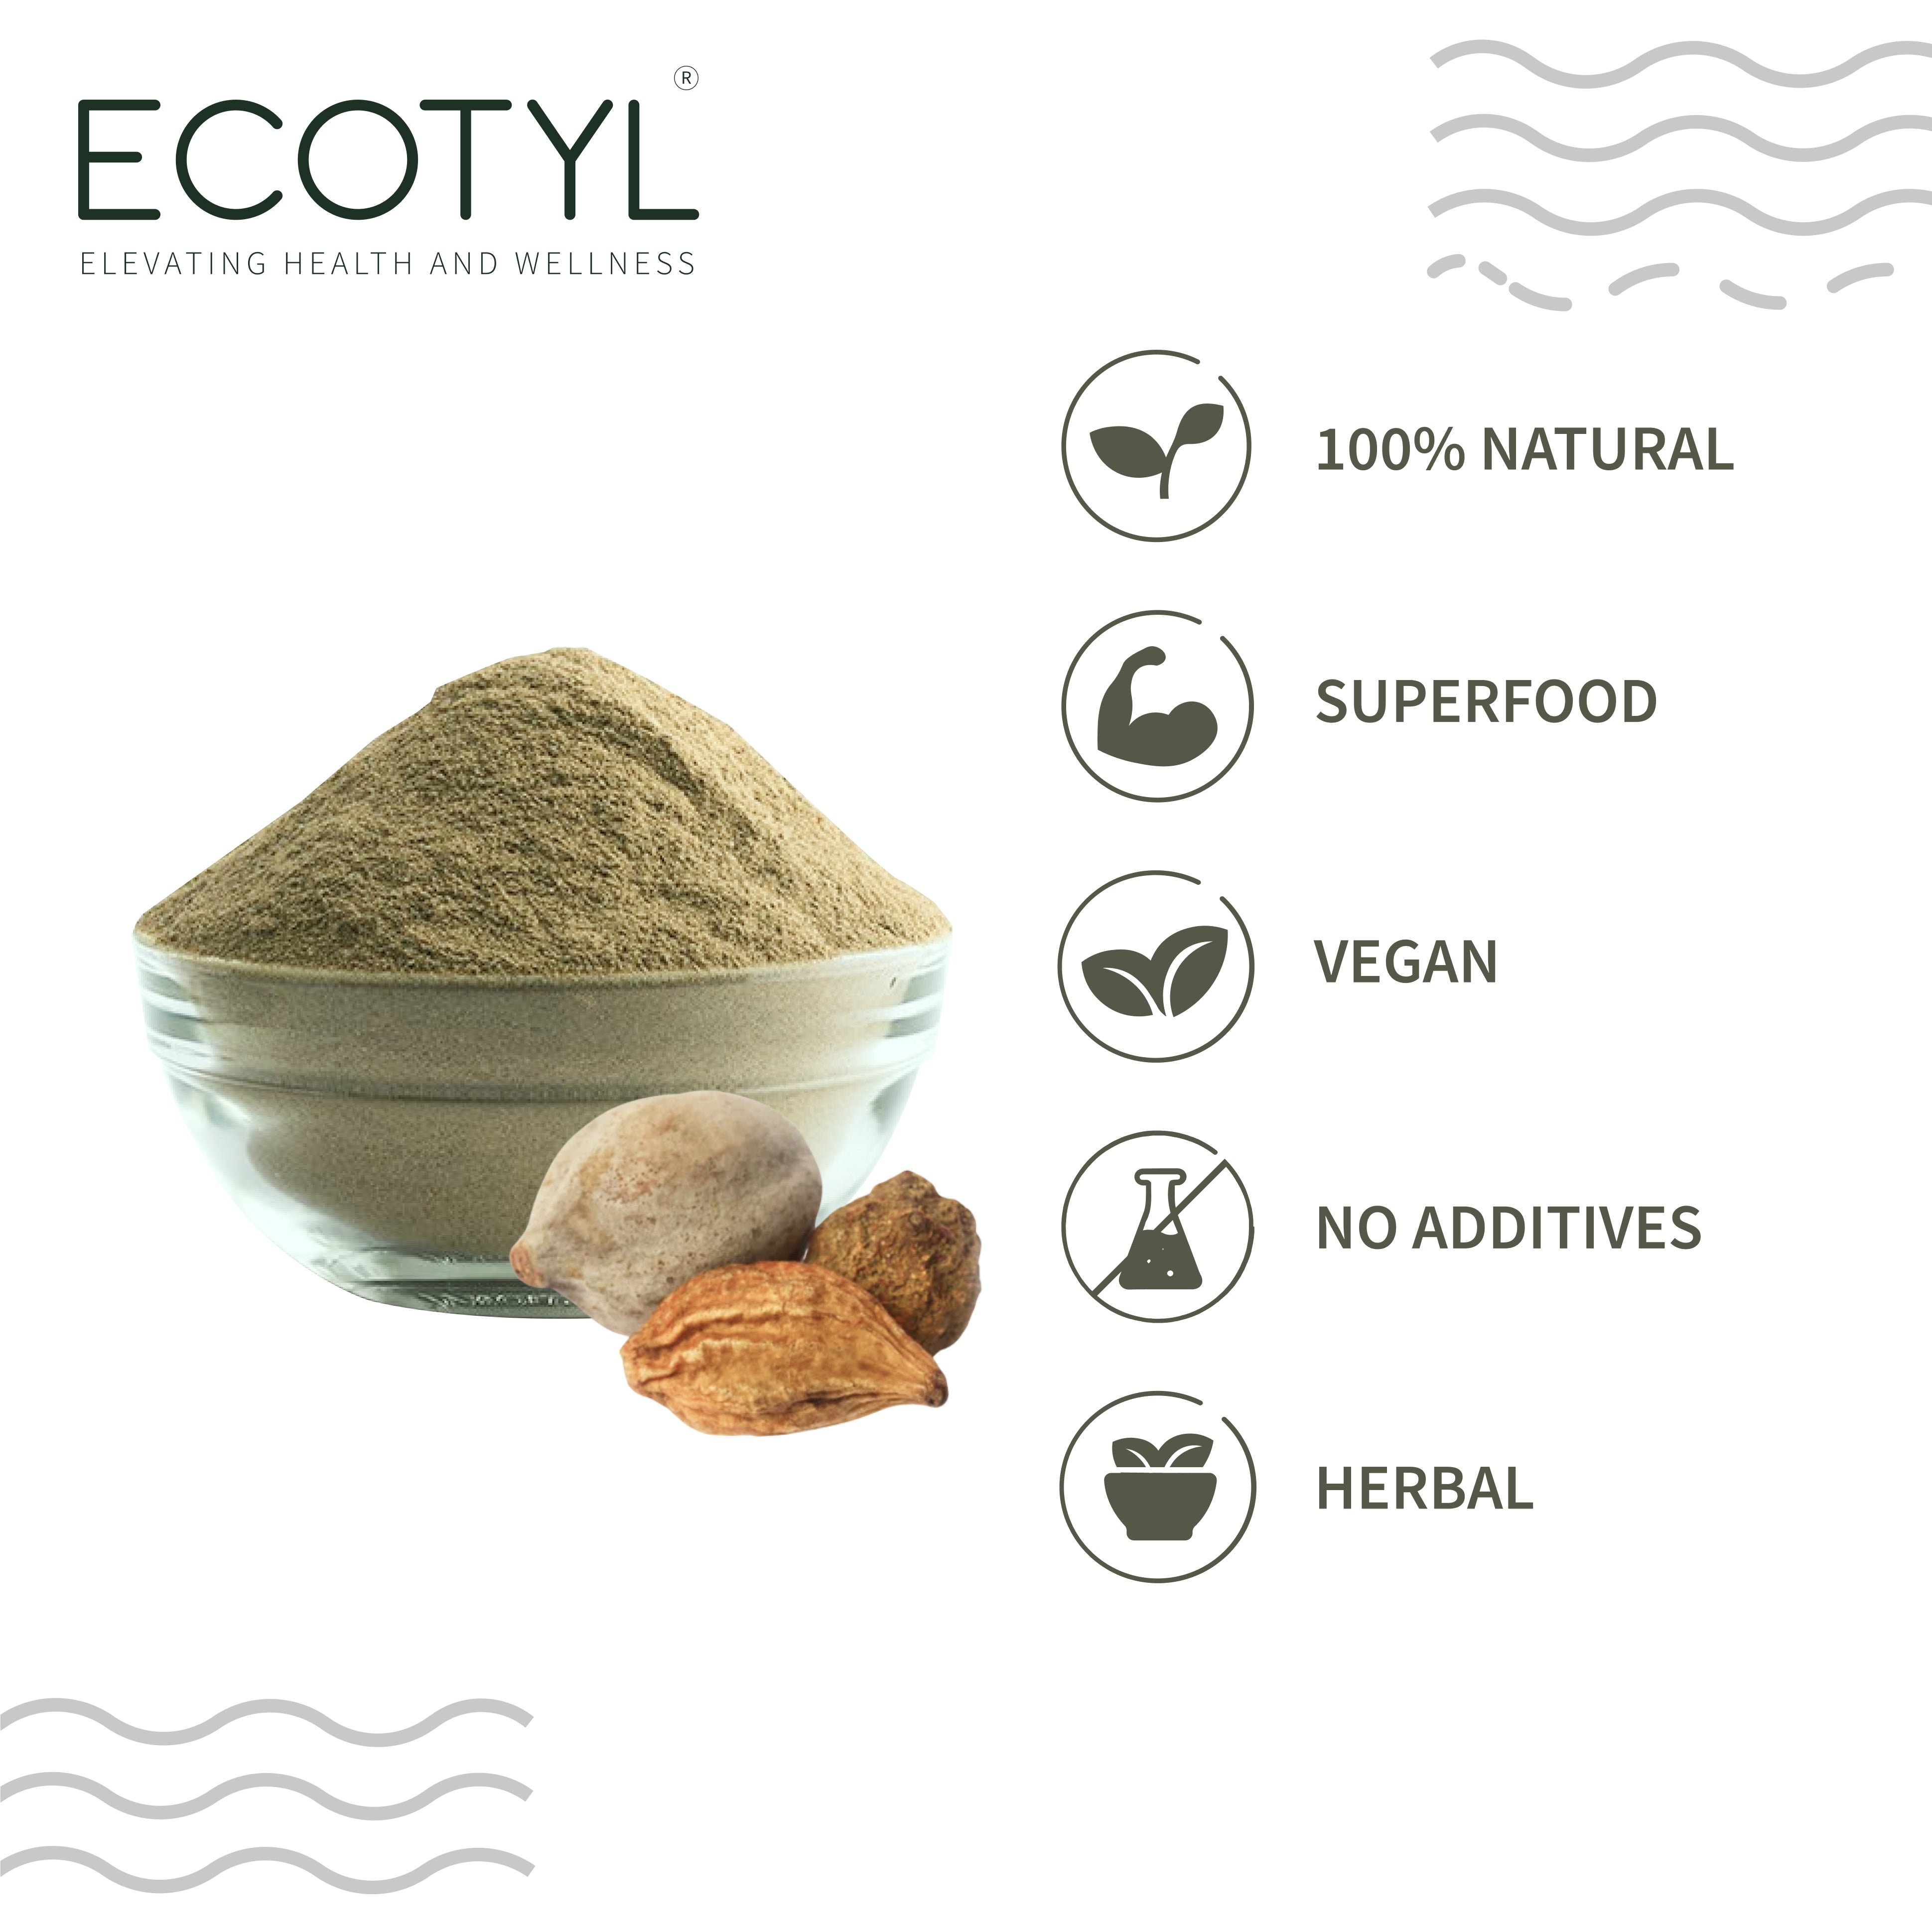 Ecotyl Triphala Powder for Digestive Health & Immune System - 150g